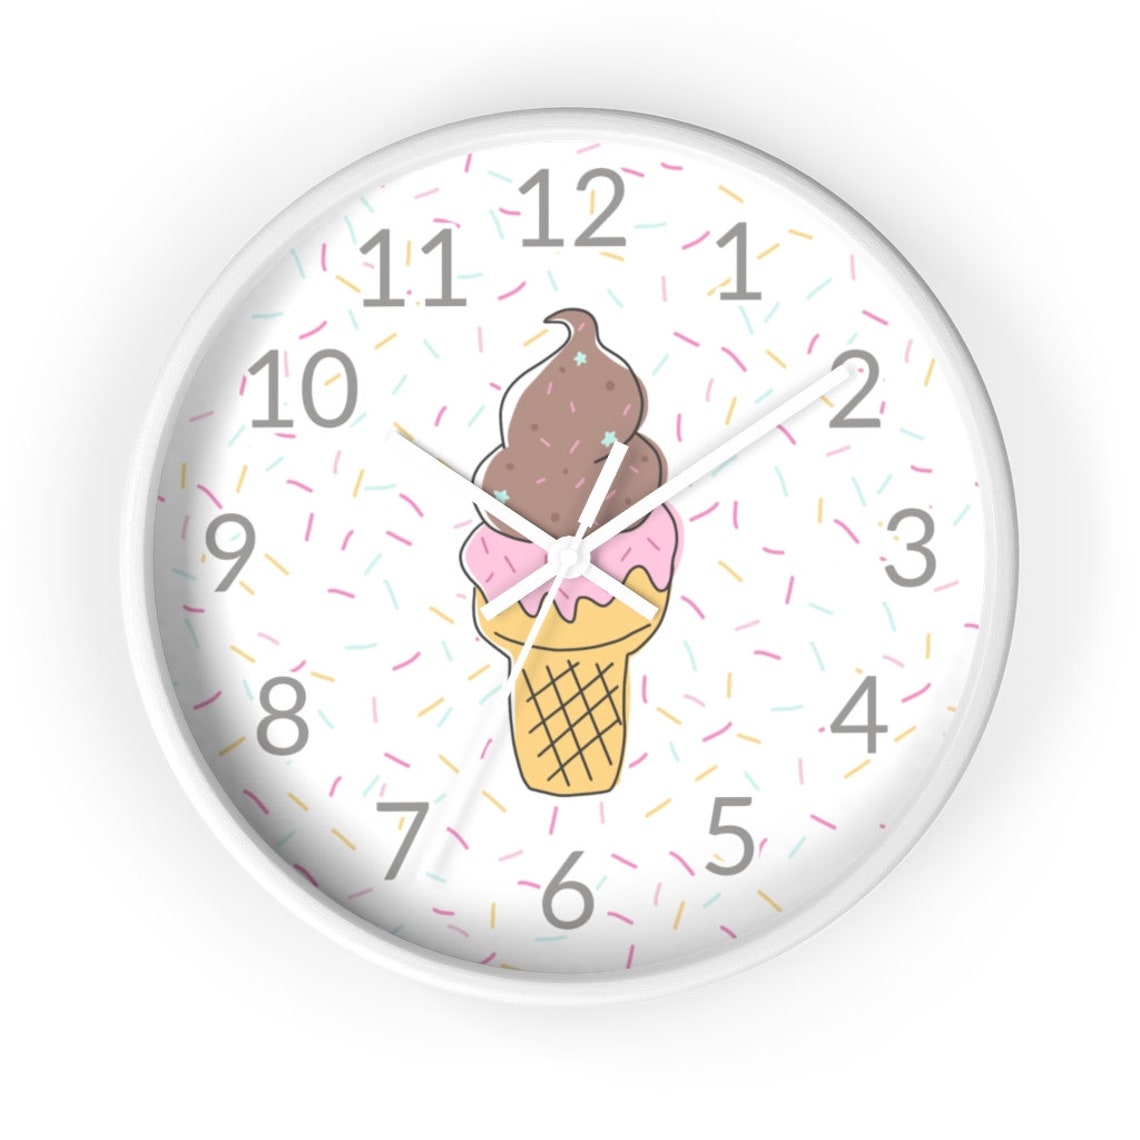 Ice cream clock Sprinkled ice cream themed nursery Kids Wall | Etsy